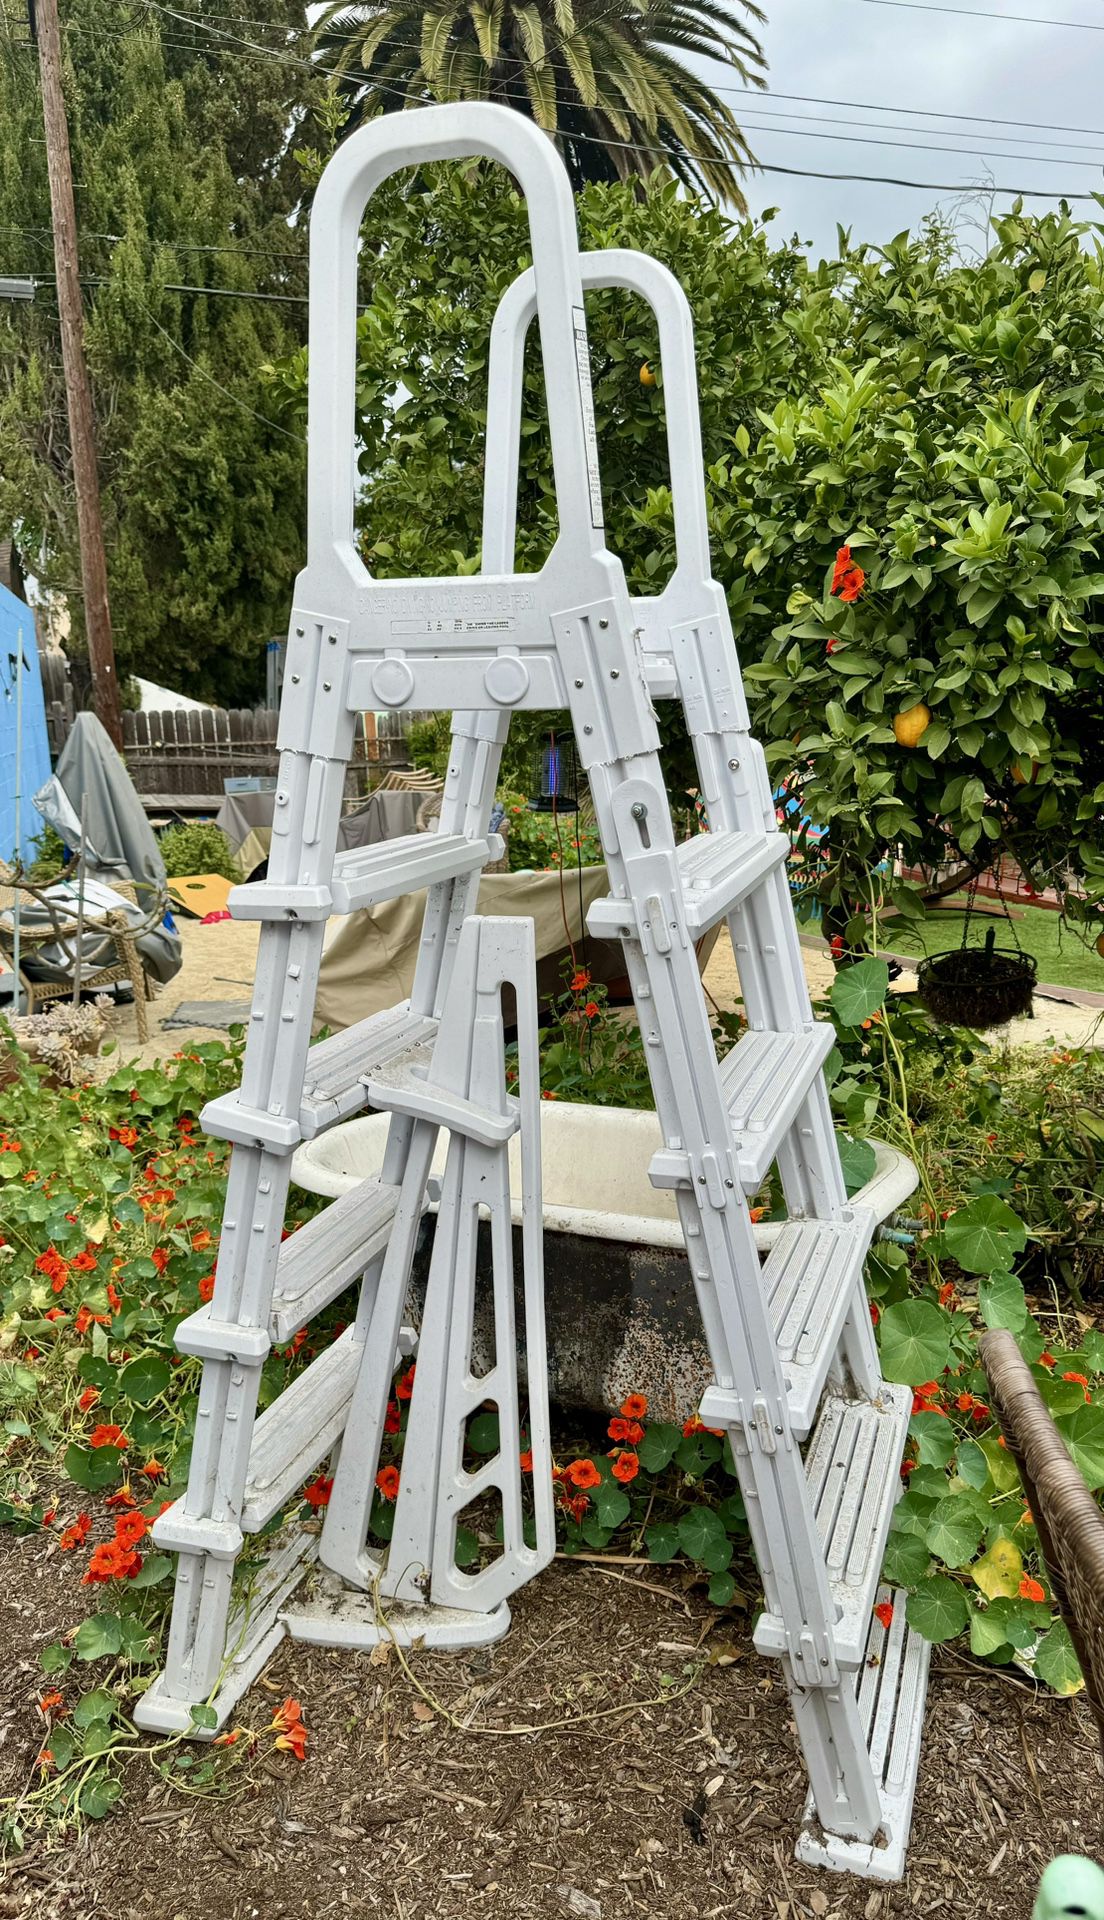 Heavy Duty Pool Ladder